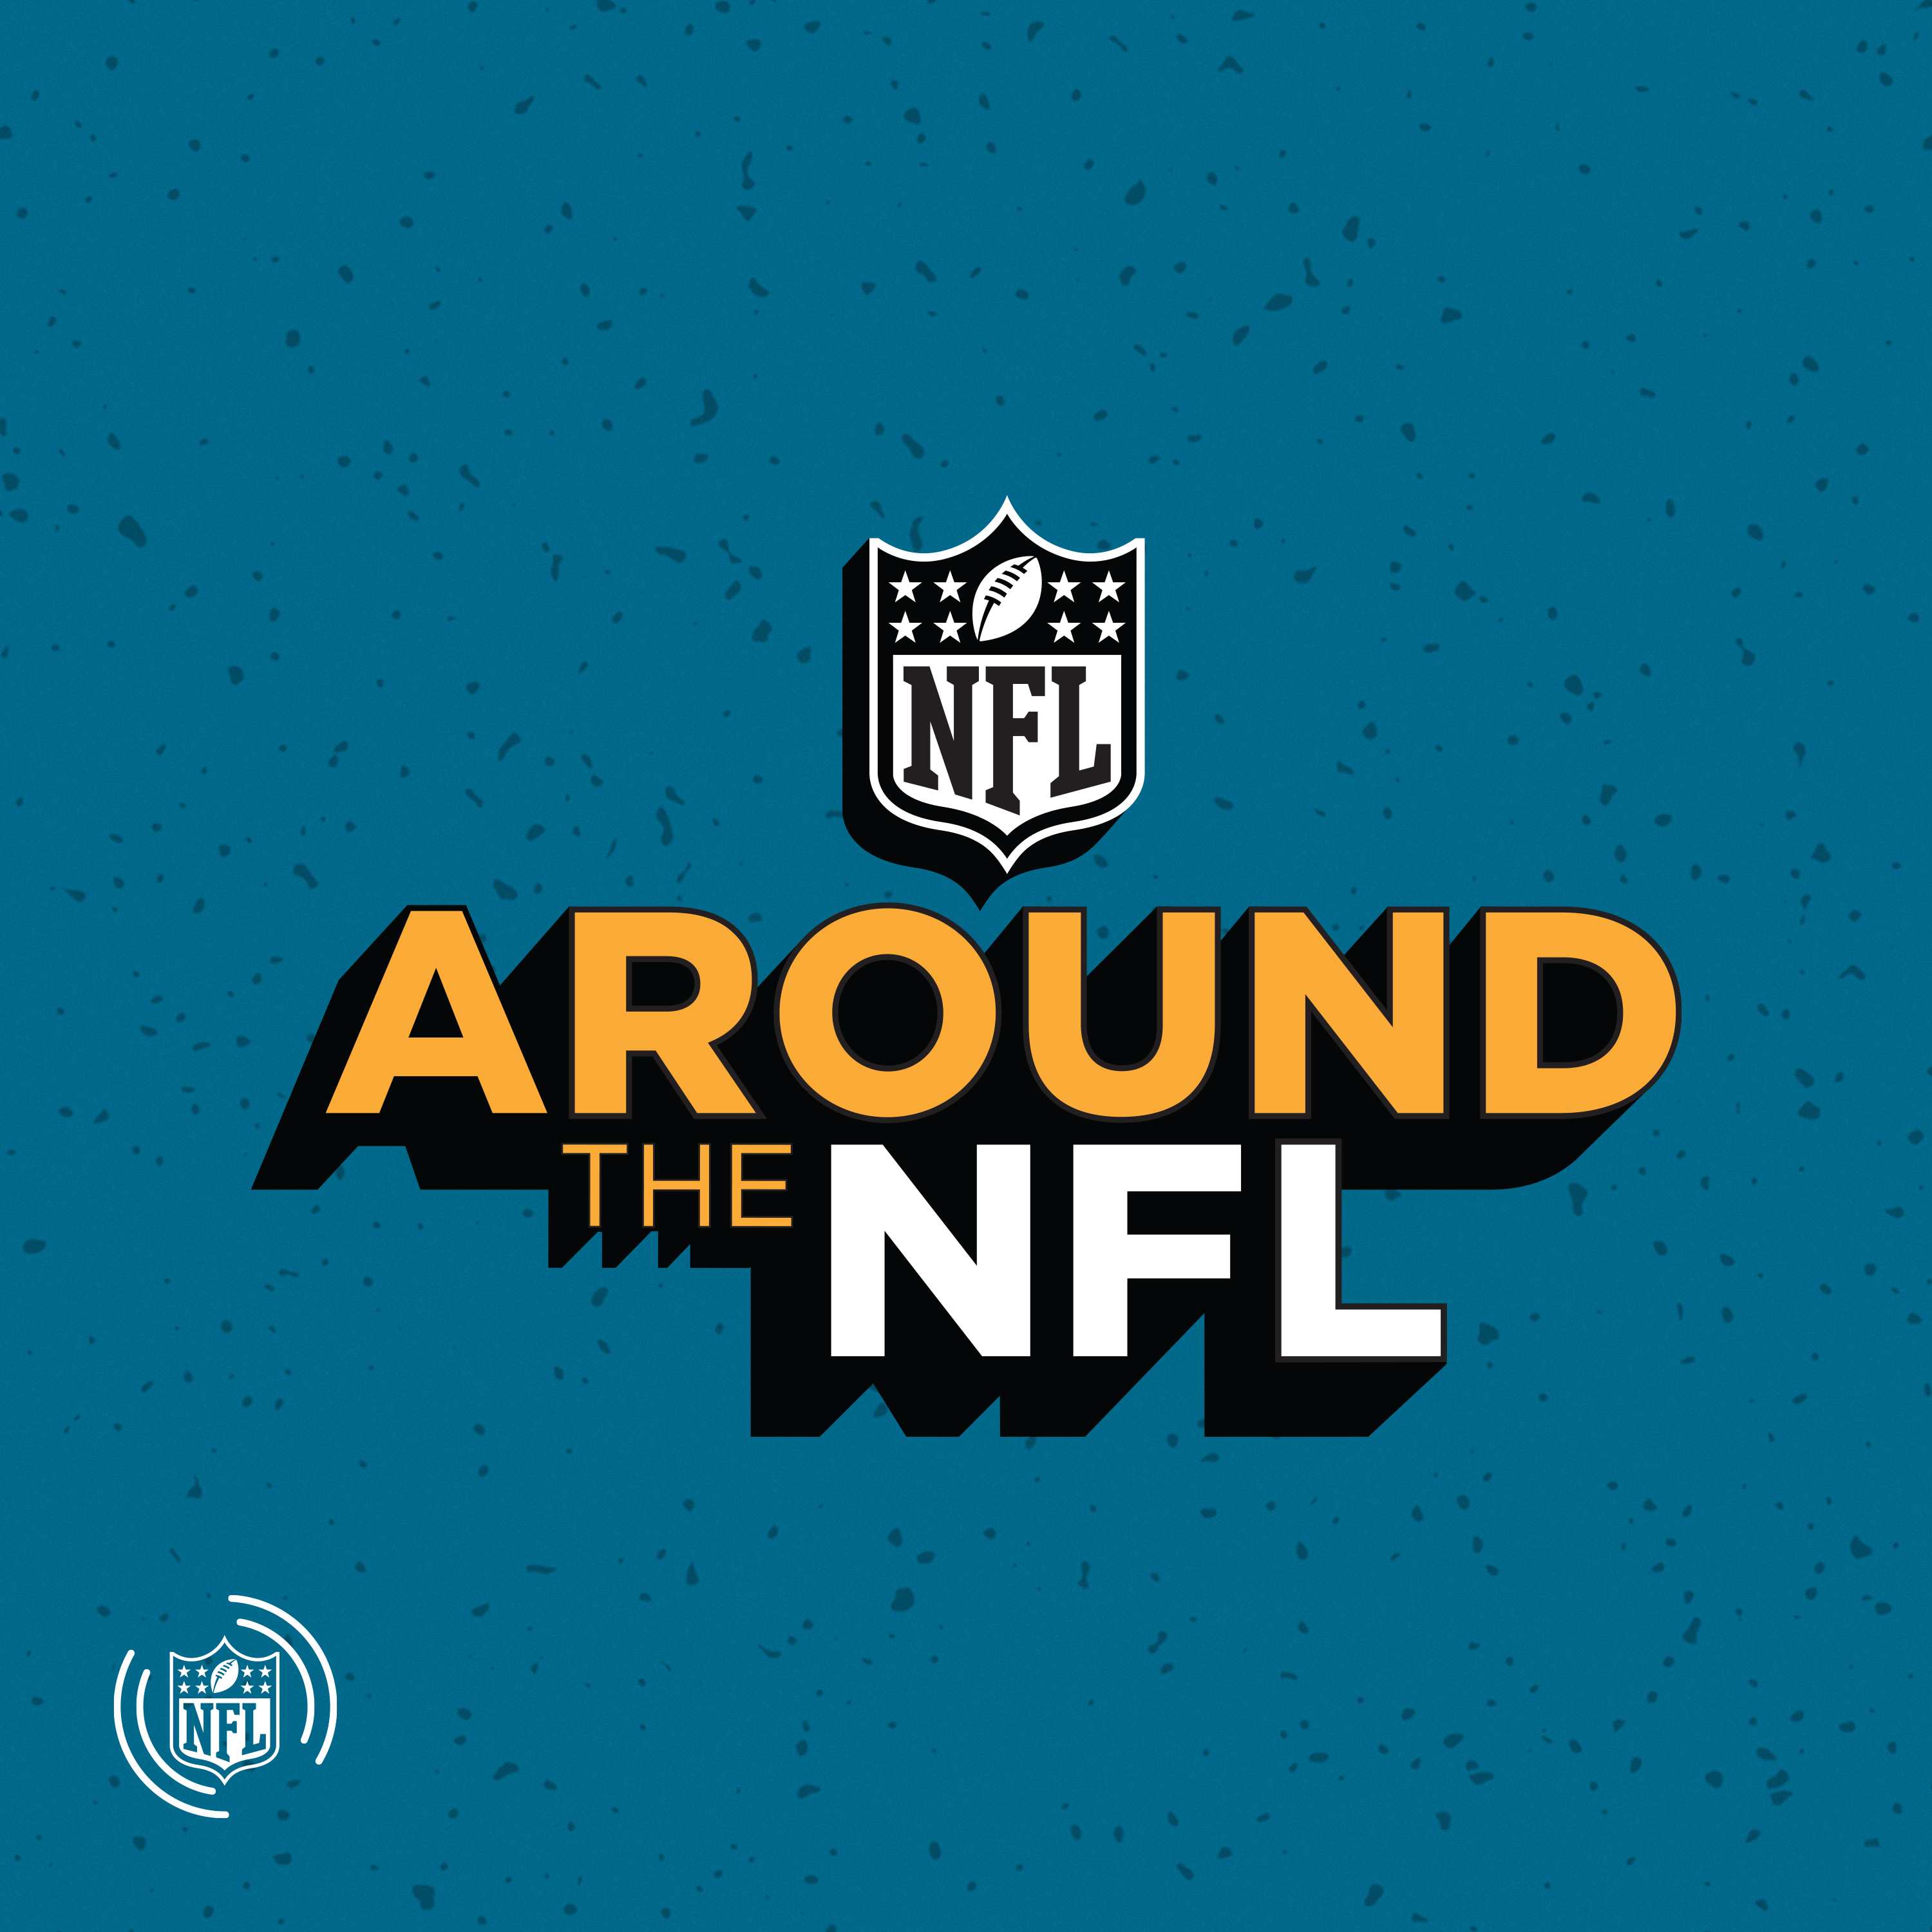 Romo reaction & free agency roundup